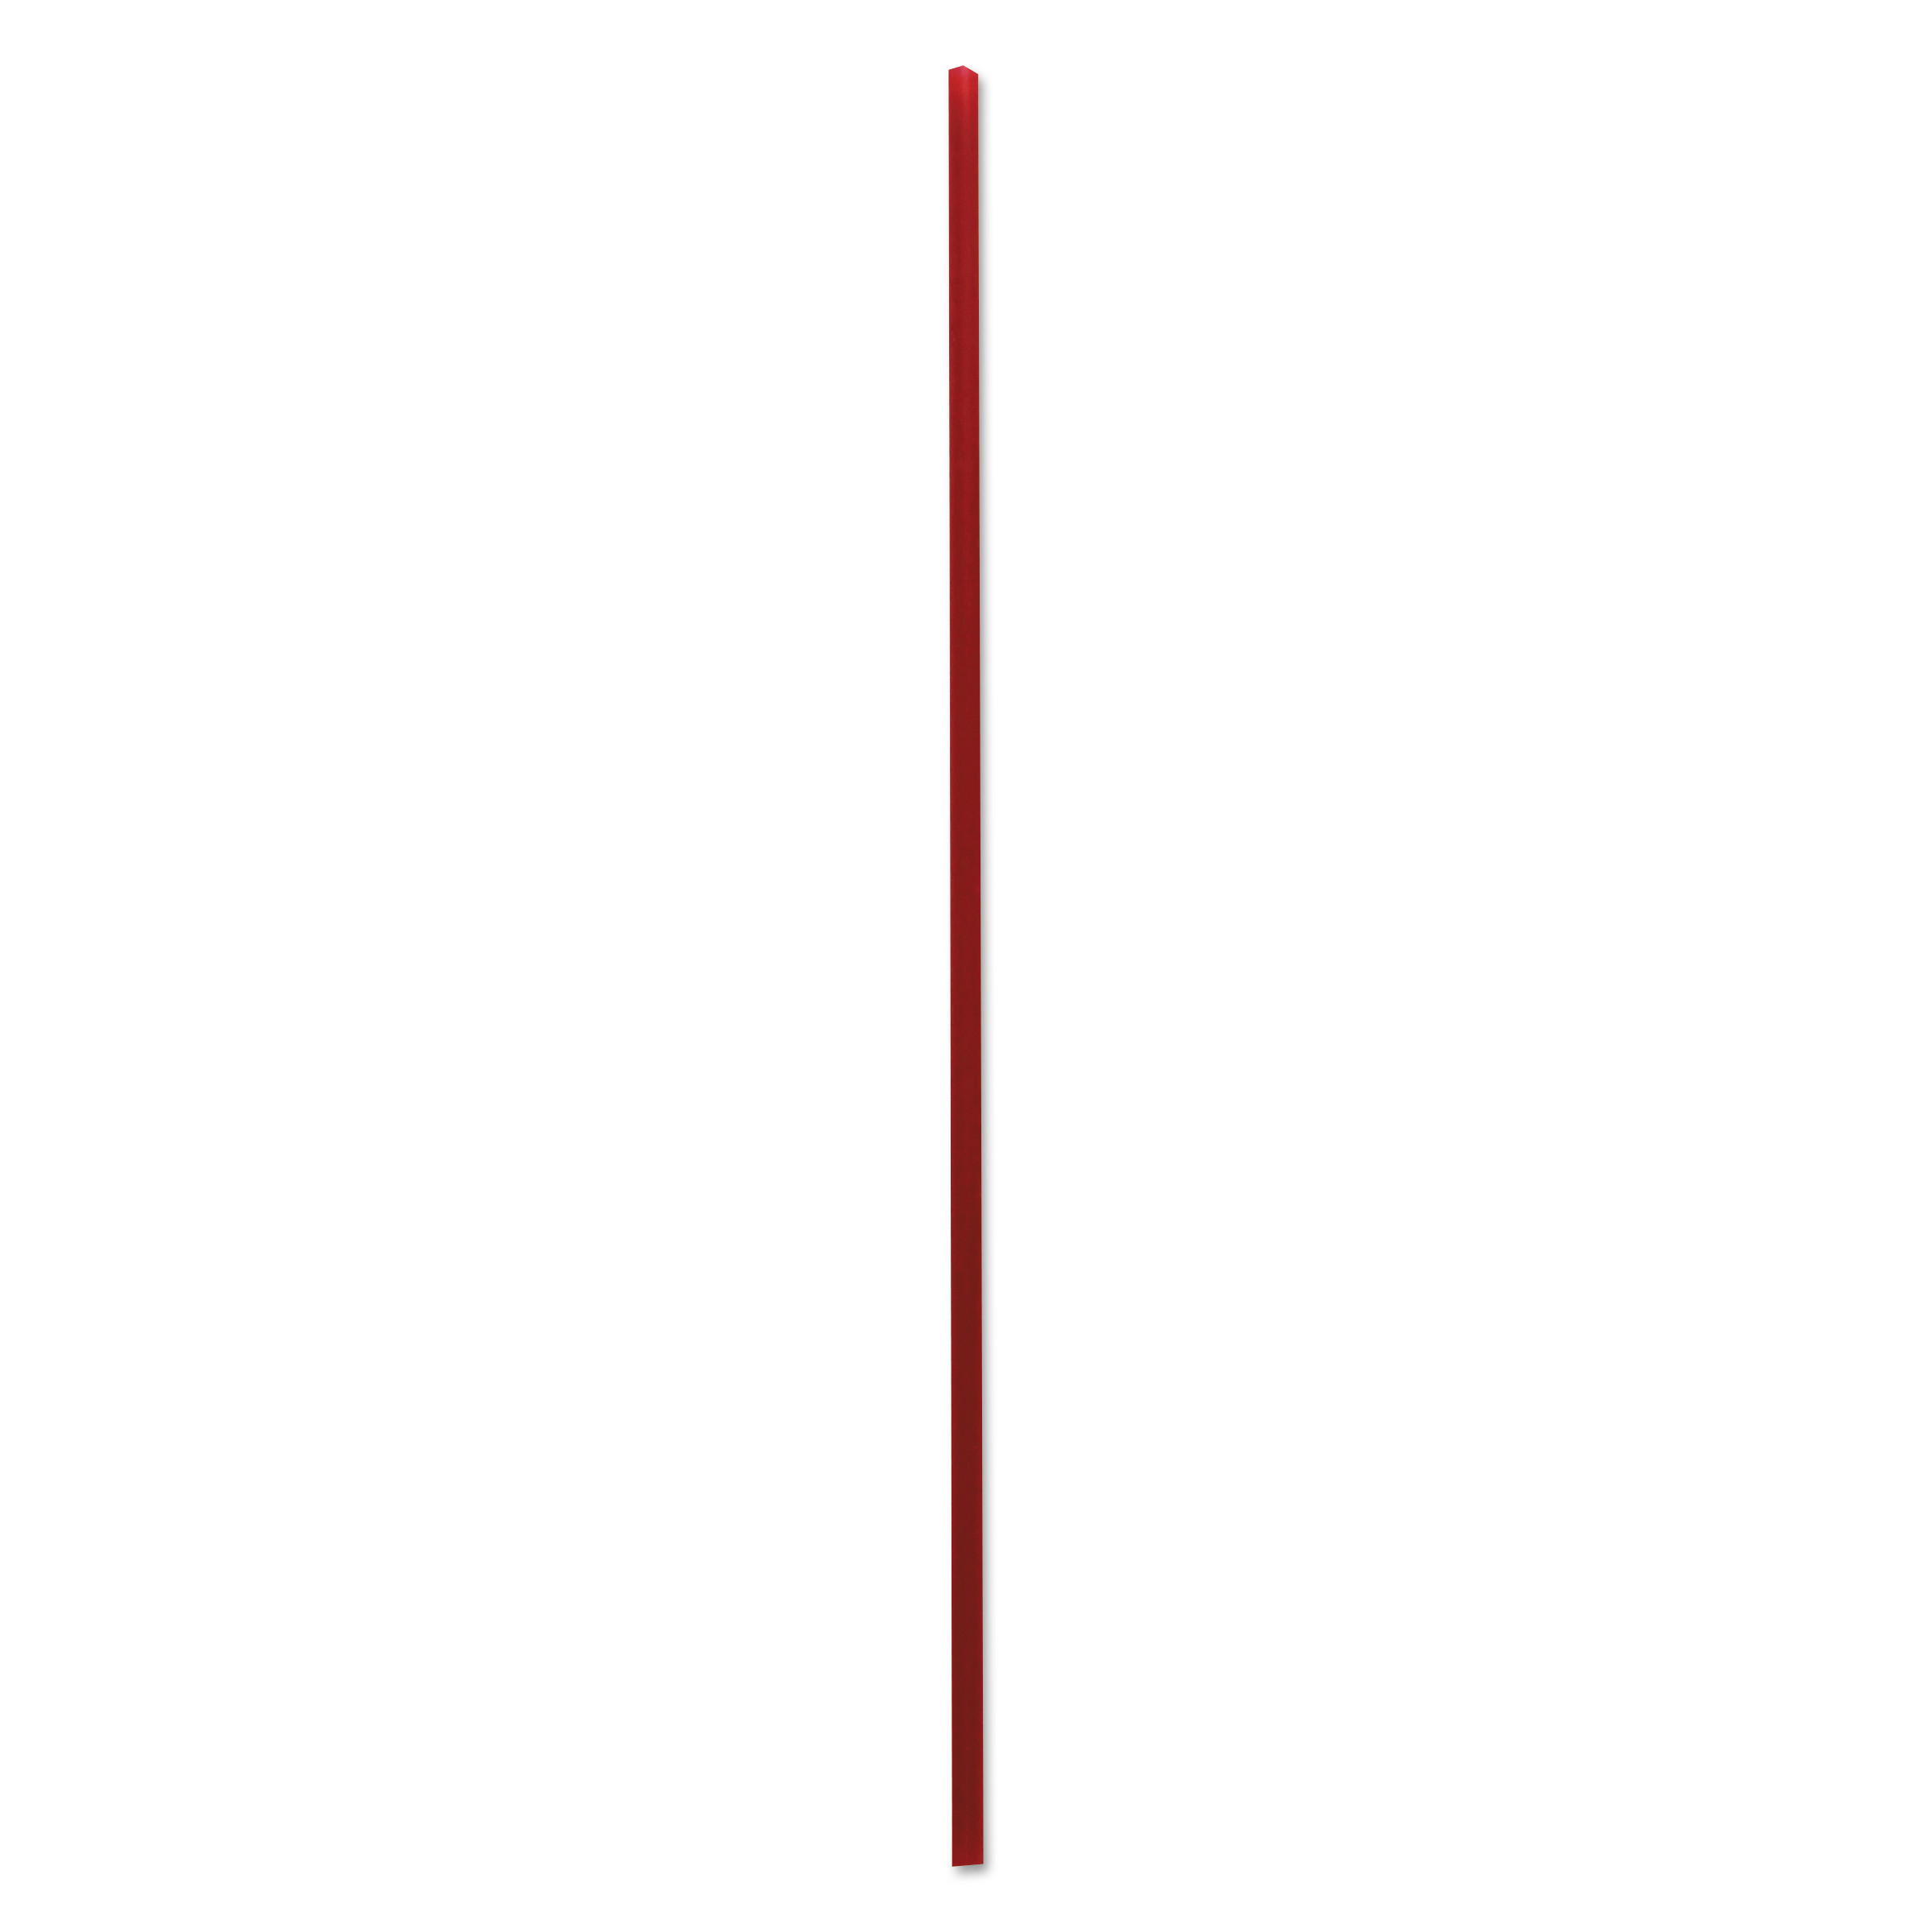 Unwrapped Single-Tube Stir-Straws, 6, Red, 10000/Carton